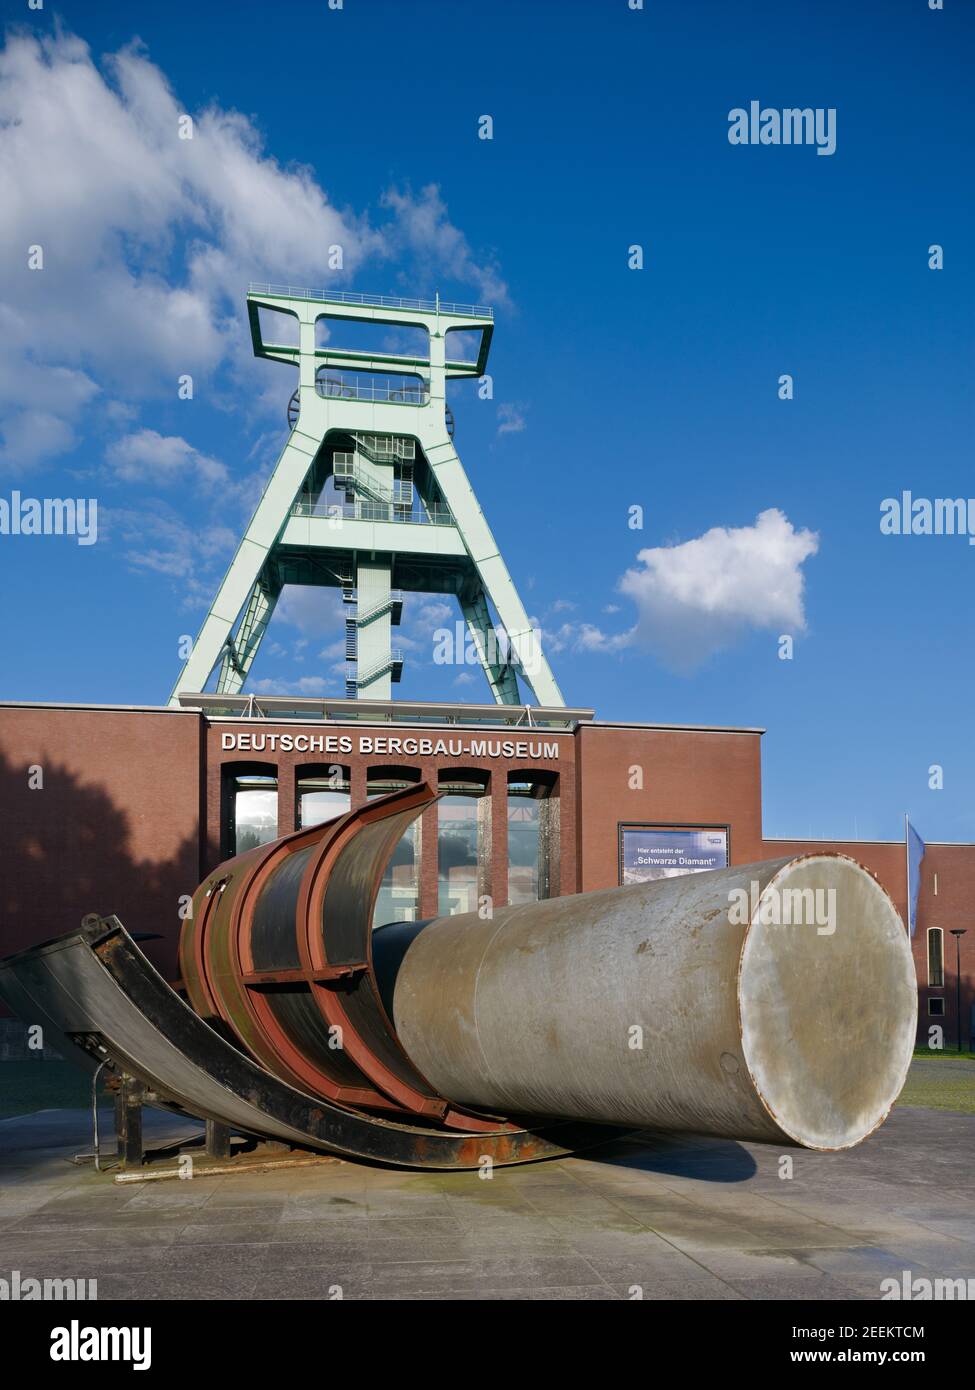 German mining museum, Bochum, North Rhine-Westphalia, Germany, Europe Stock Photo